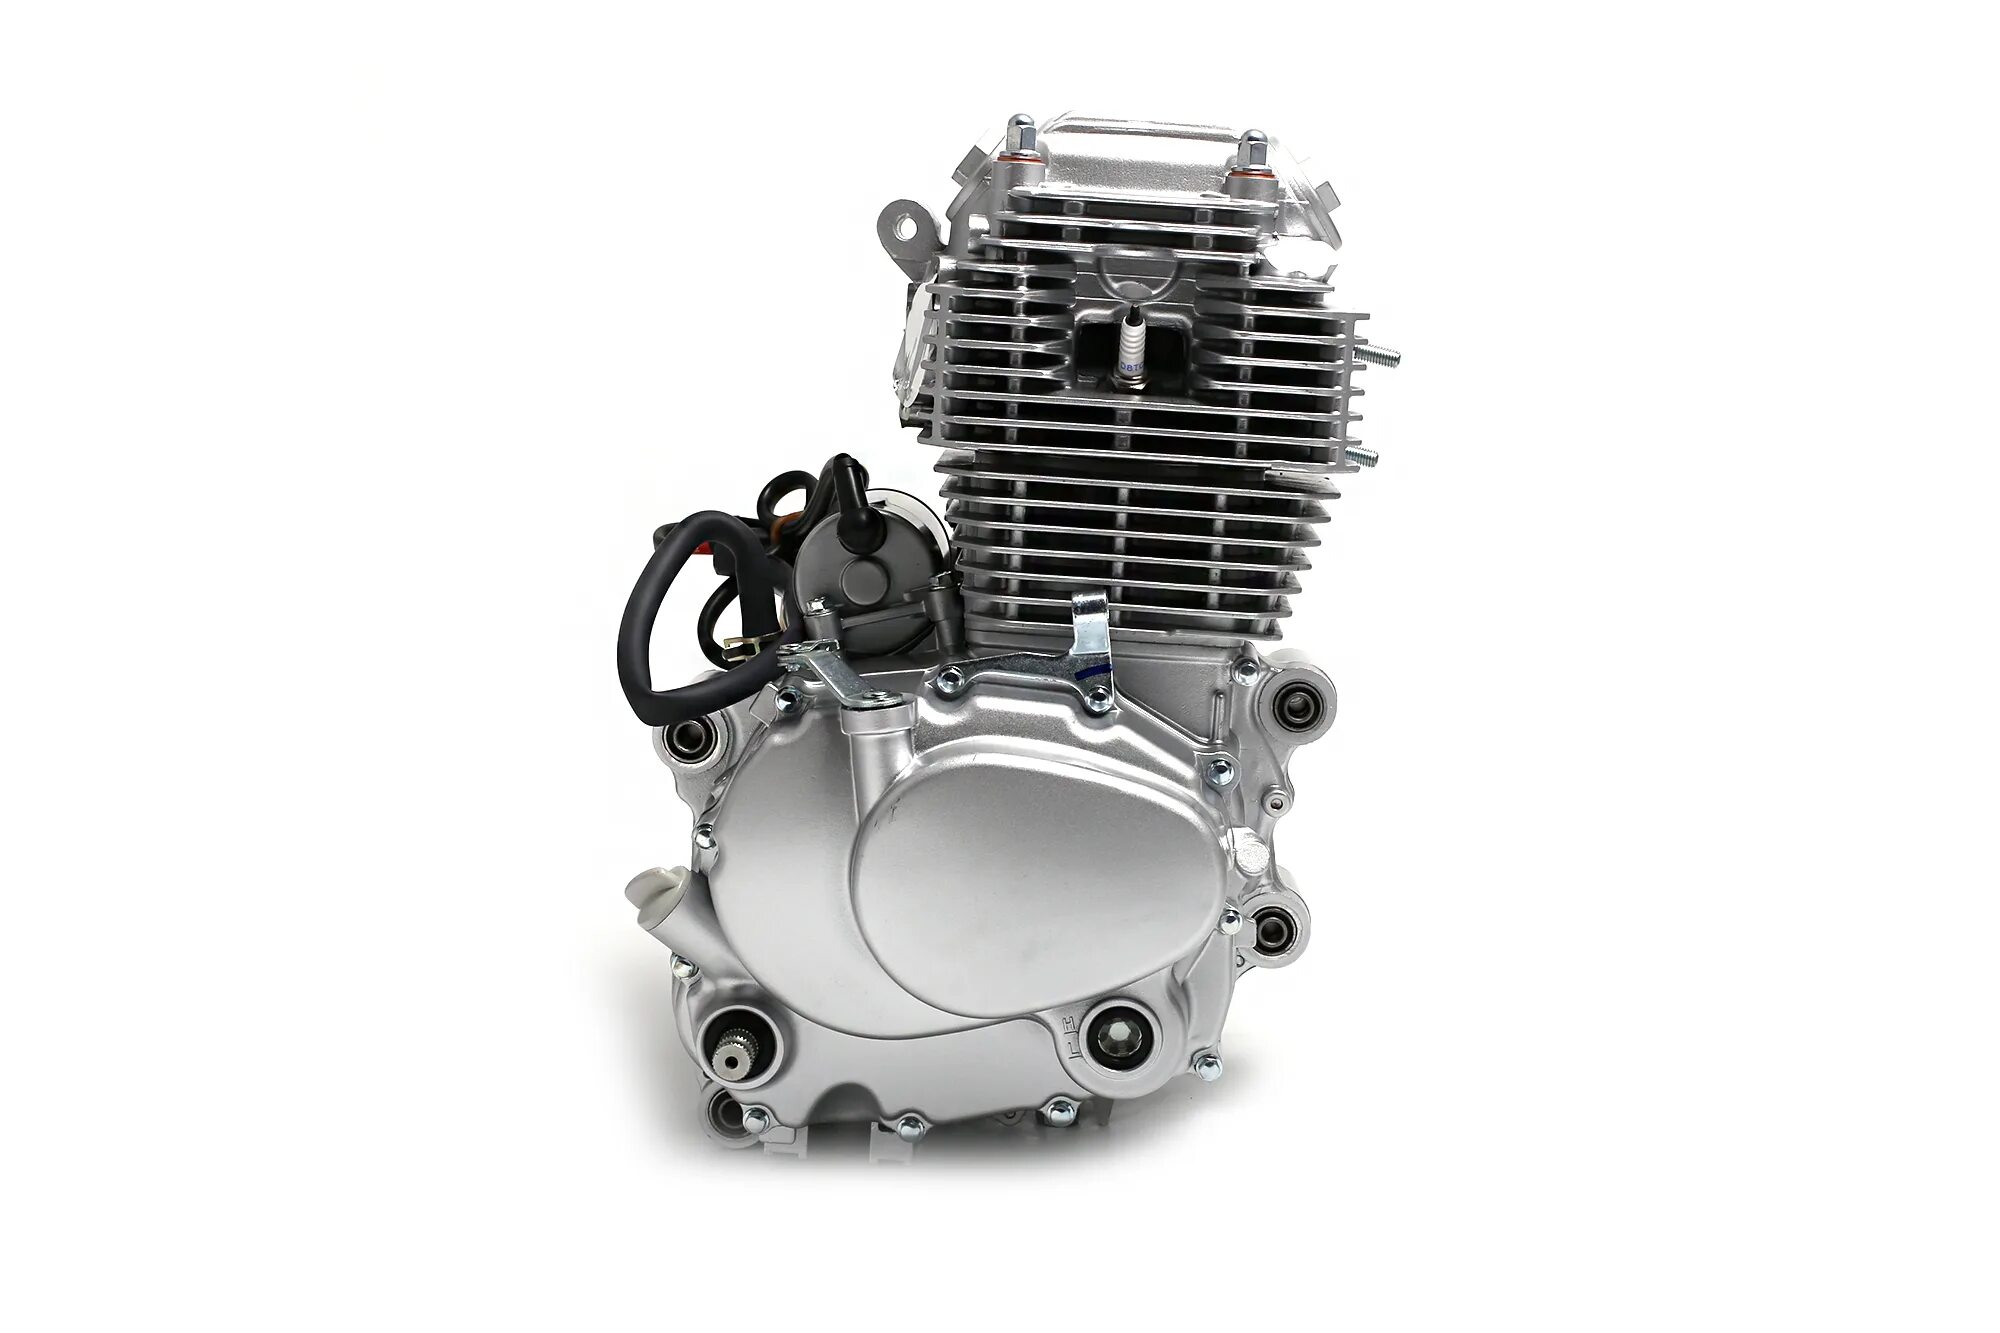 Zs172fmm-3a. ZS cb250-f/172fmm-3a. Двигатель в сборе ZS 172fmm (cb250-f) 249см3. Zs172fmm-5. Купить 172 мотор